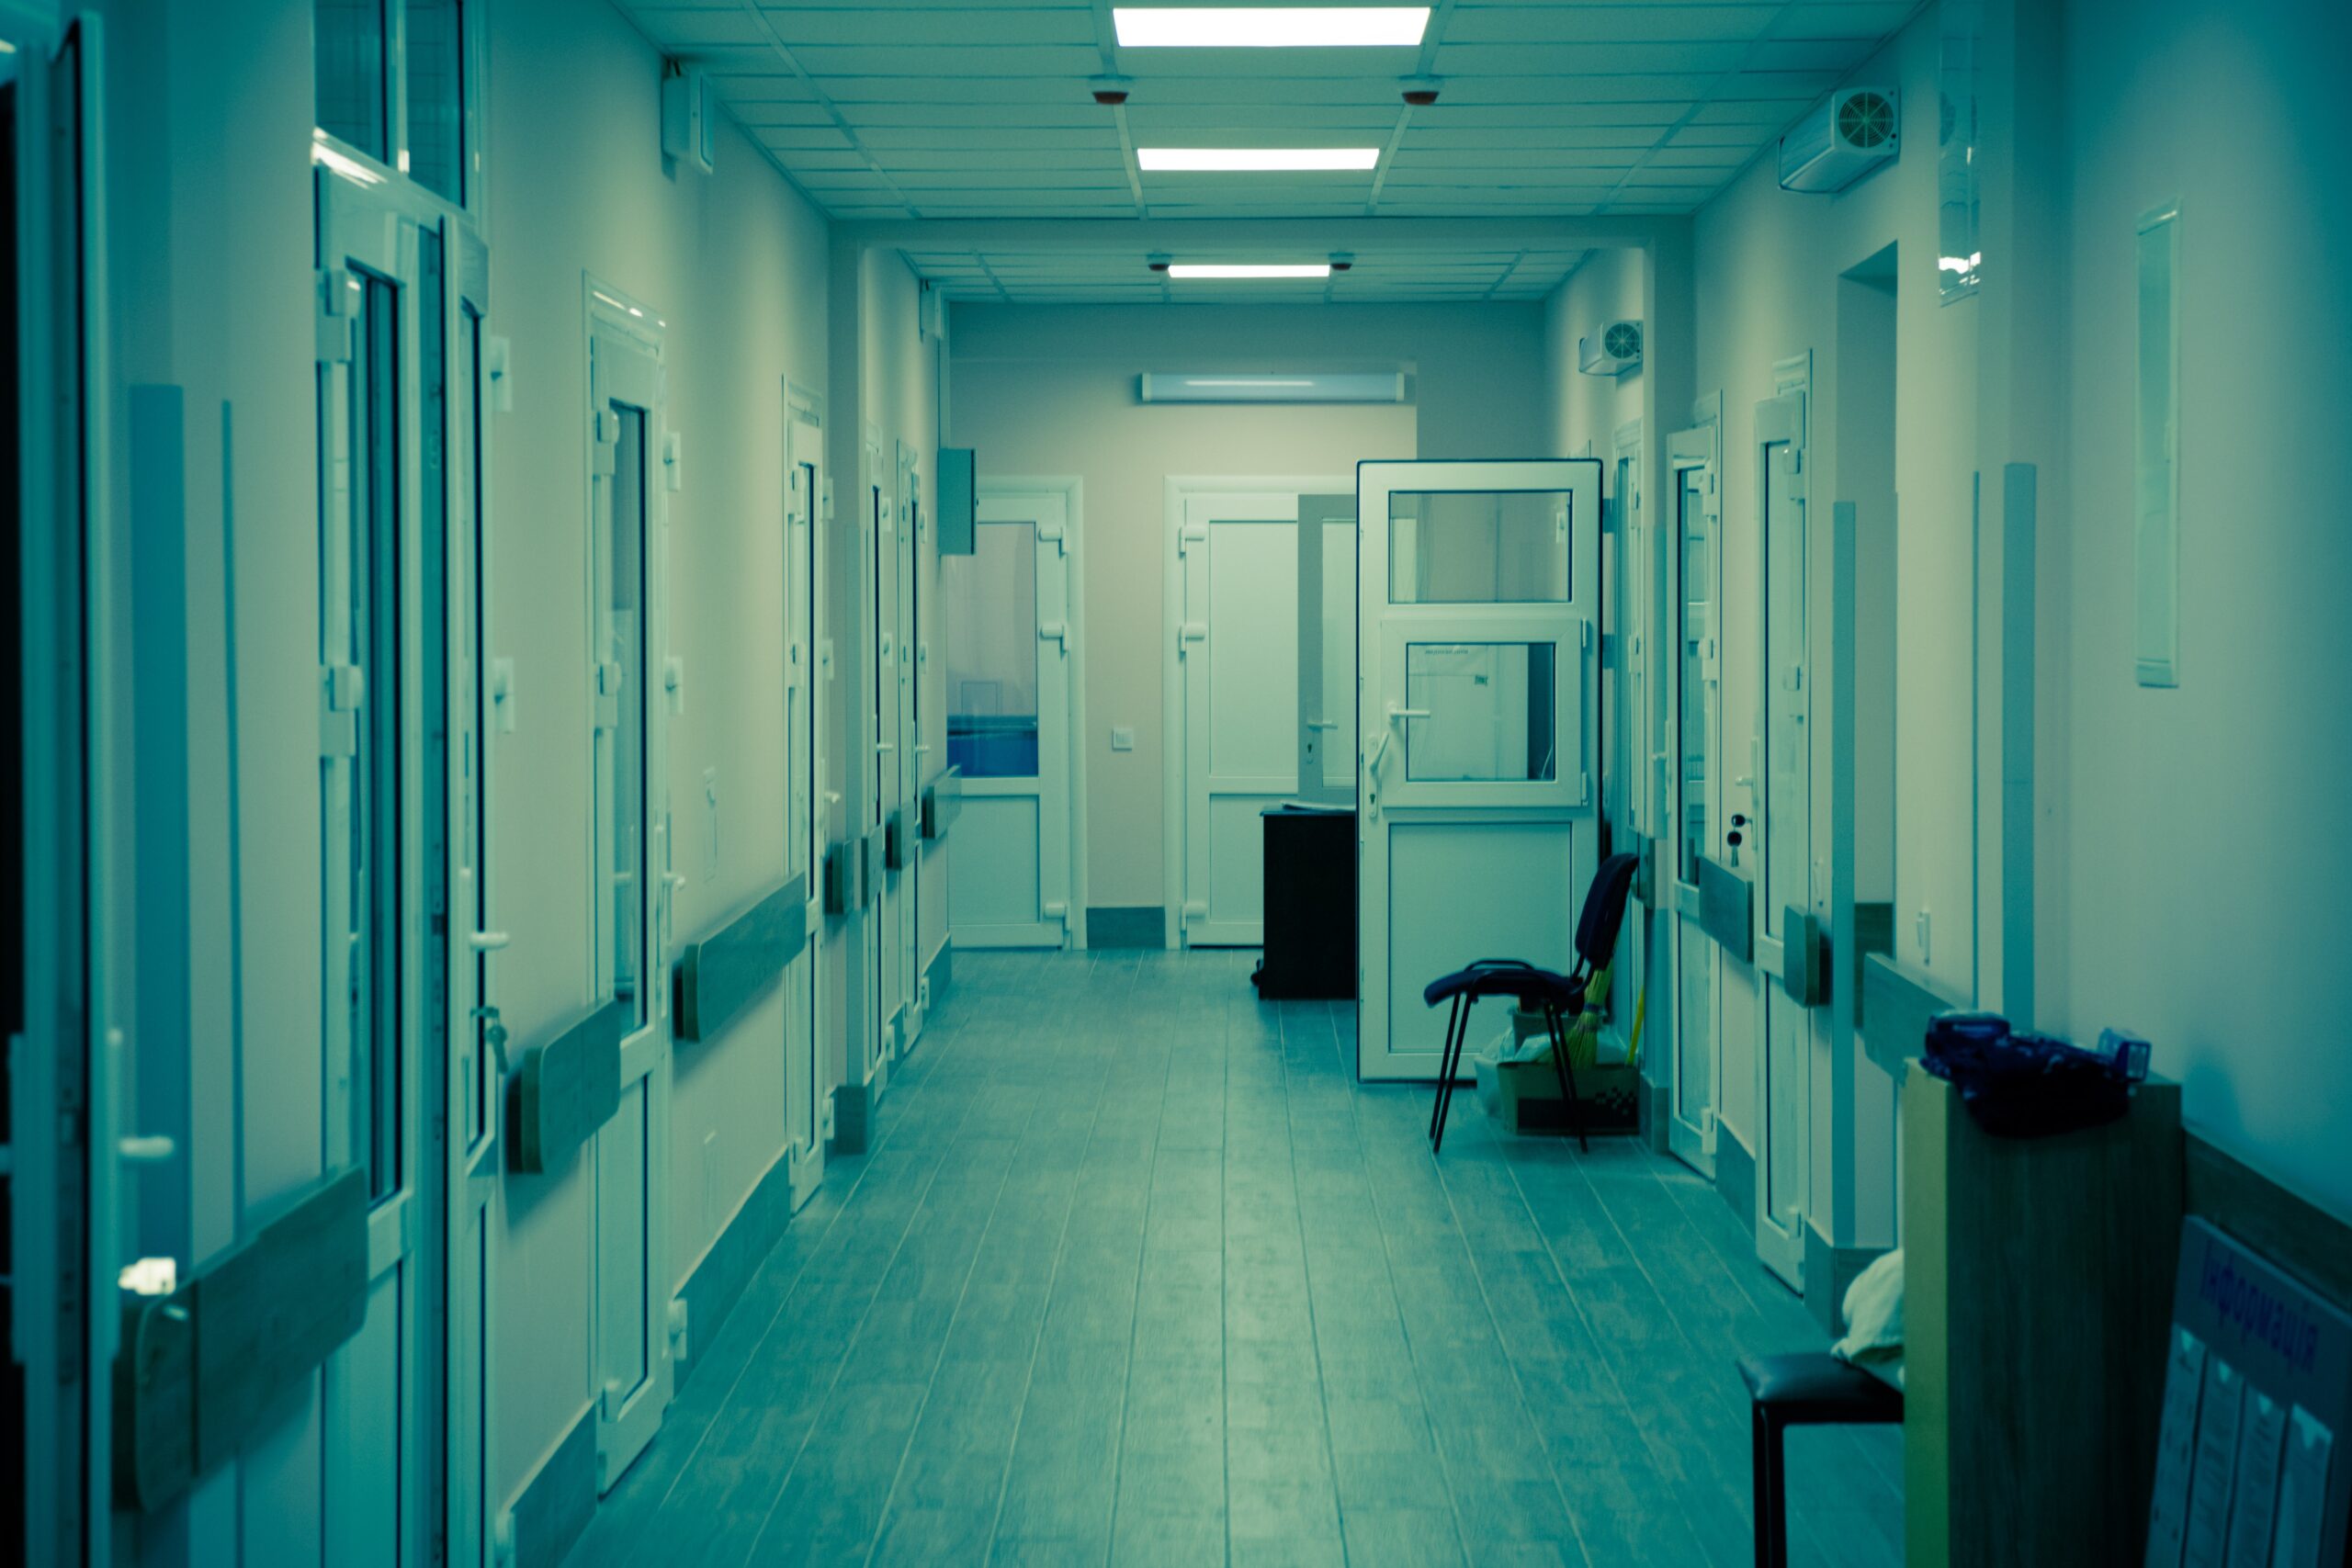 Greenish photograph of a hospital corridor.